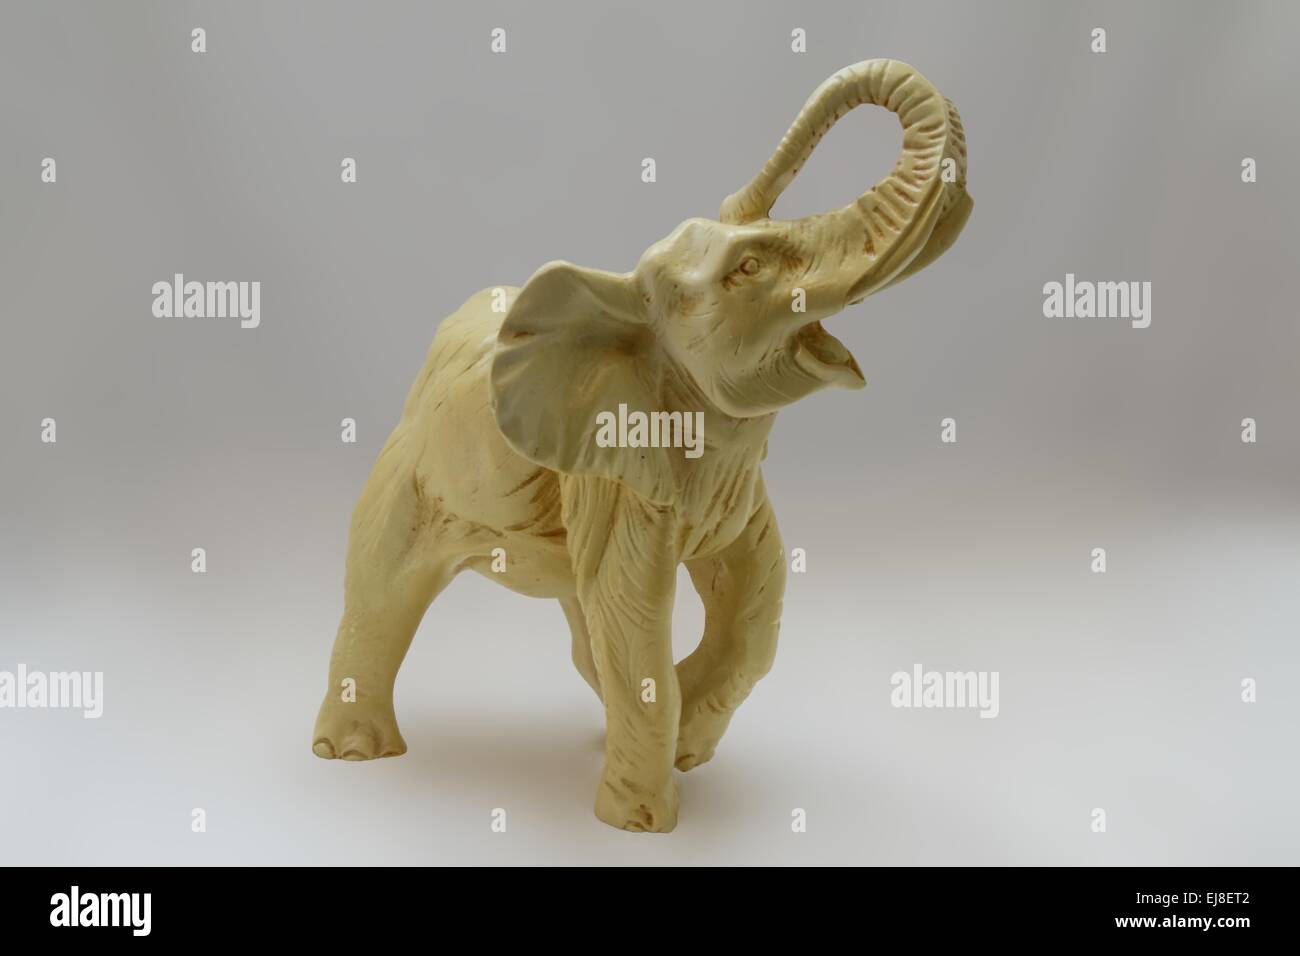 Elephant statuette Stock Photo